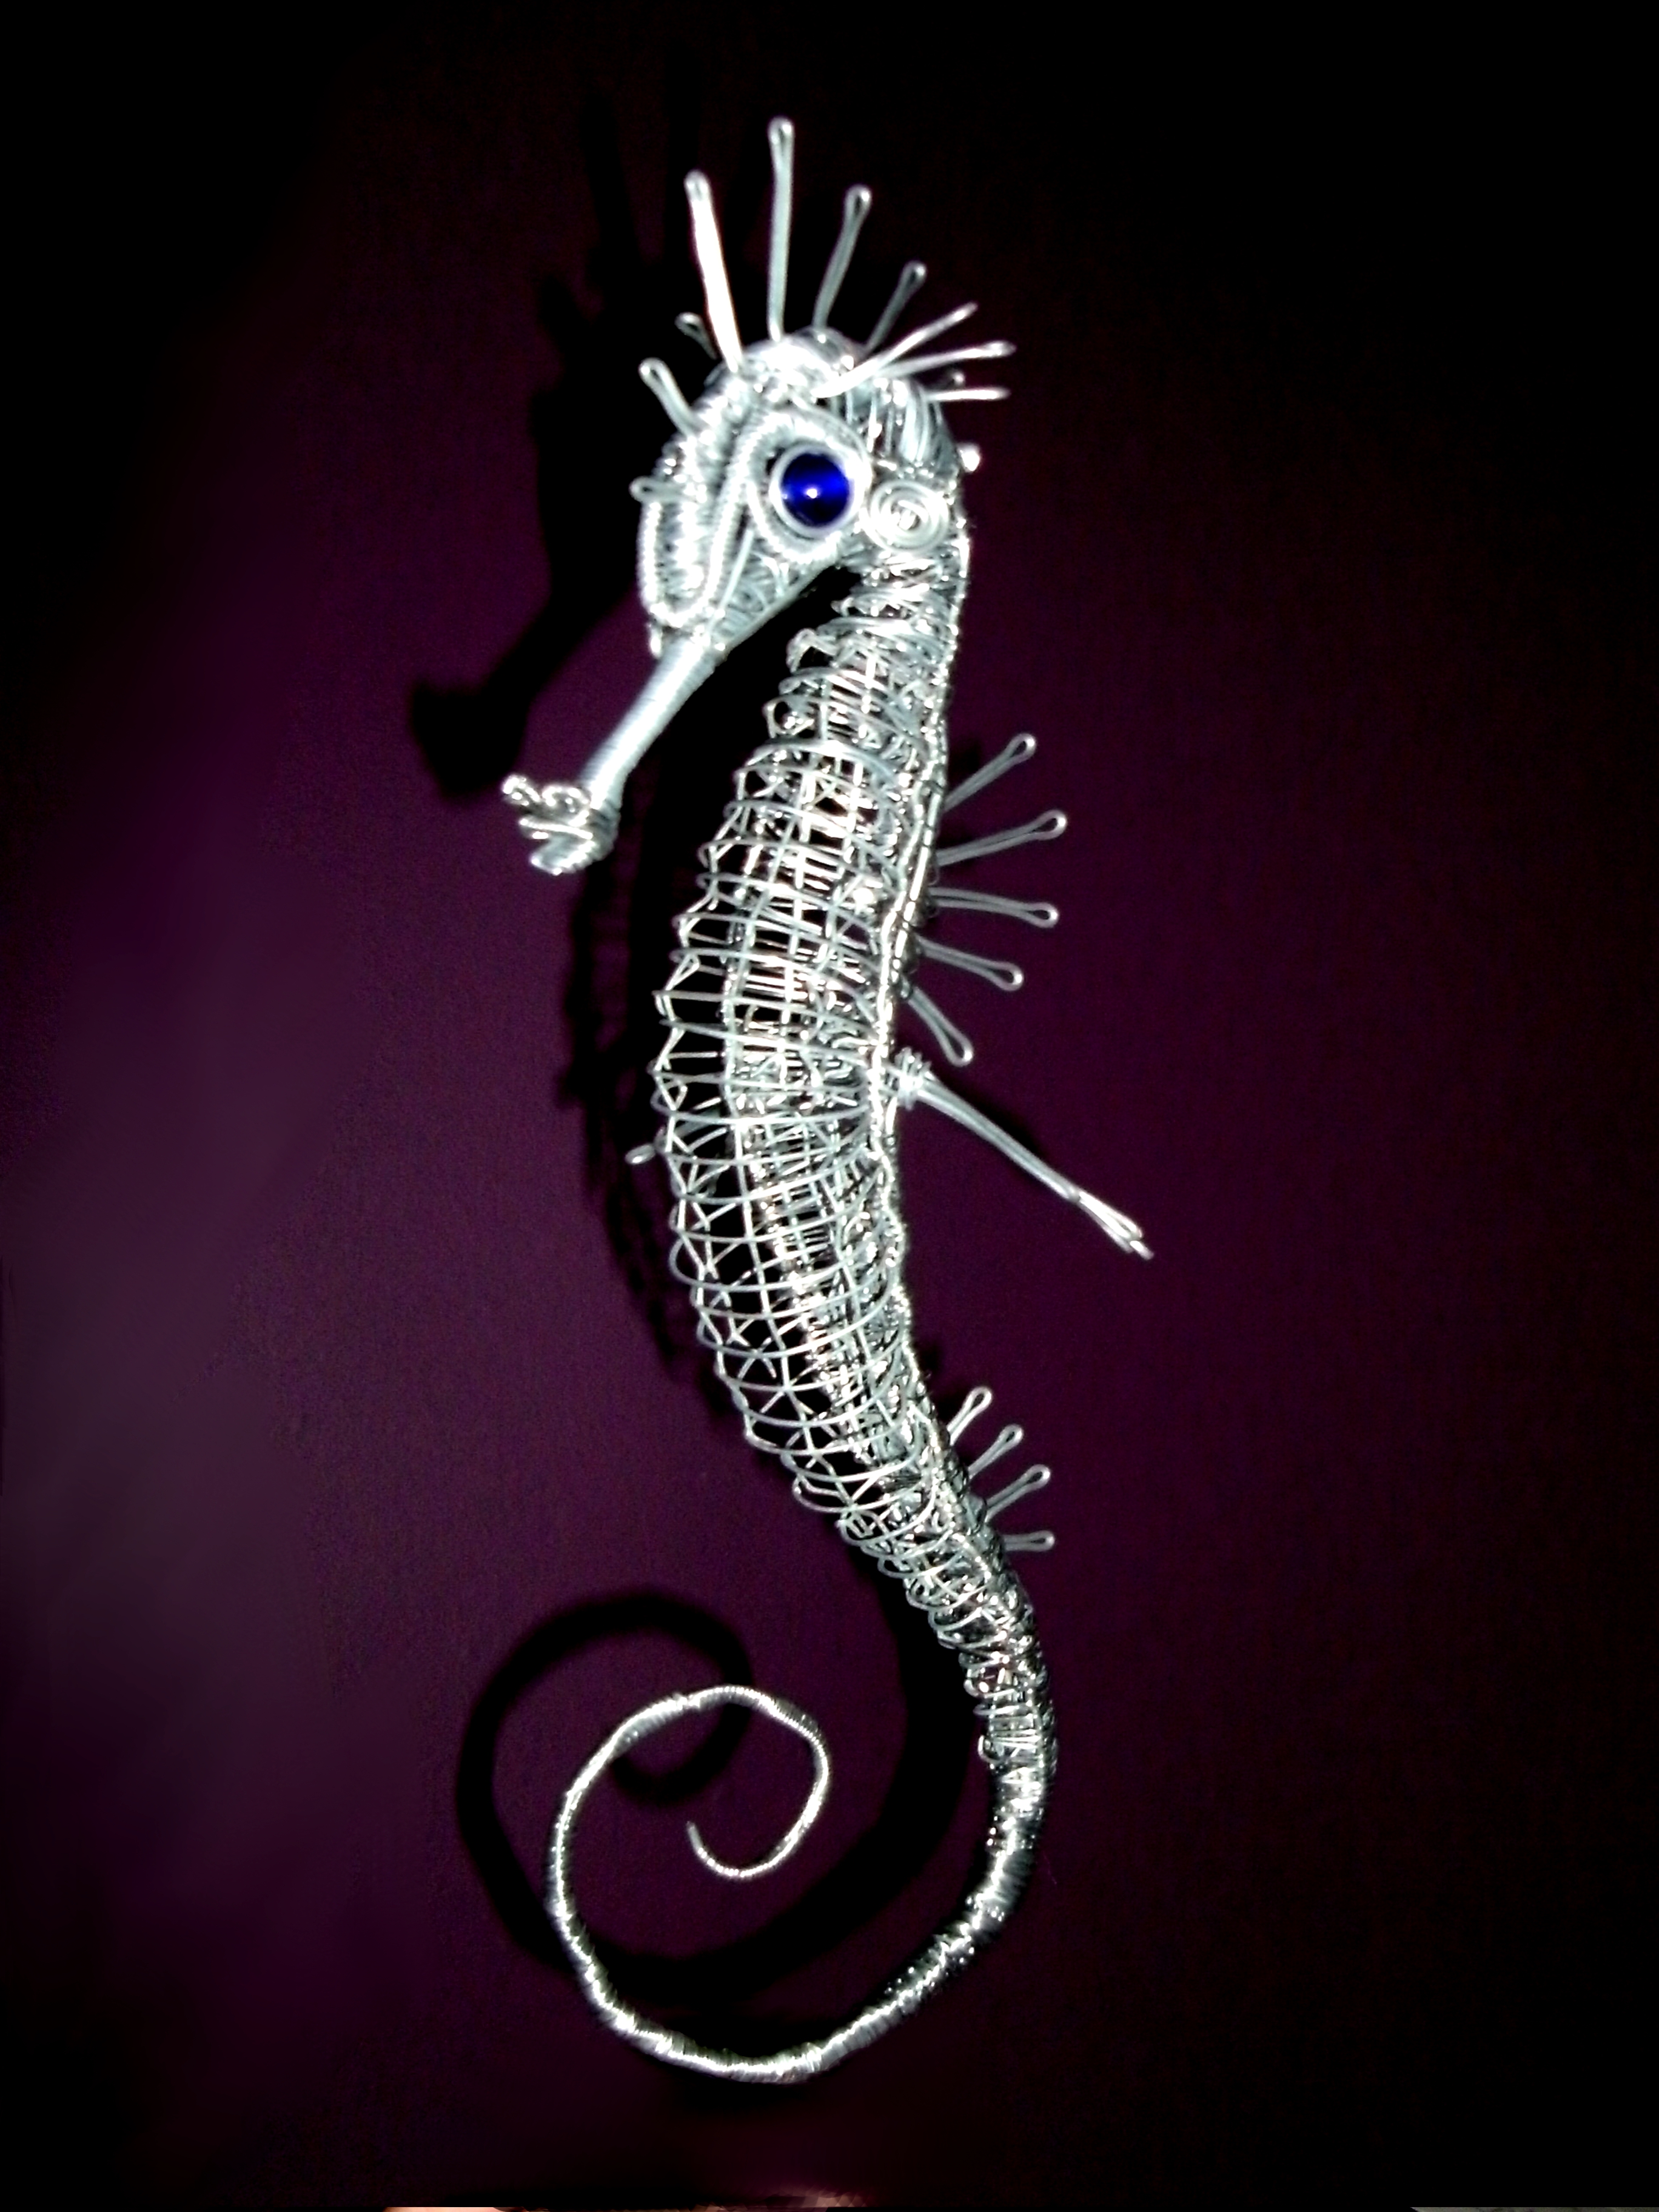 Seahorse sculpture new